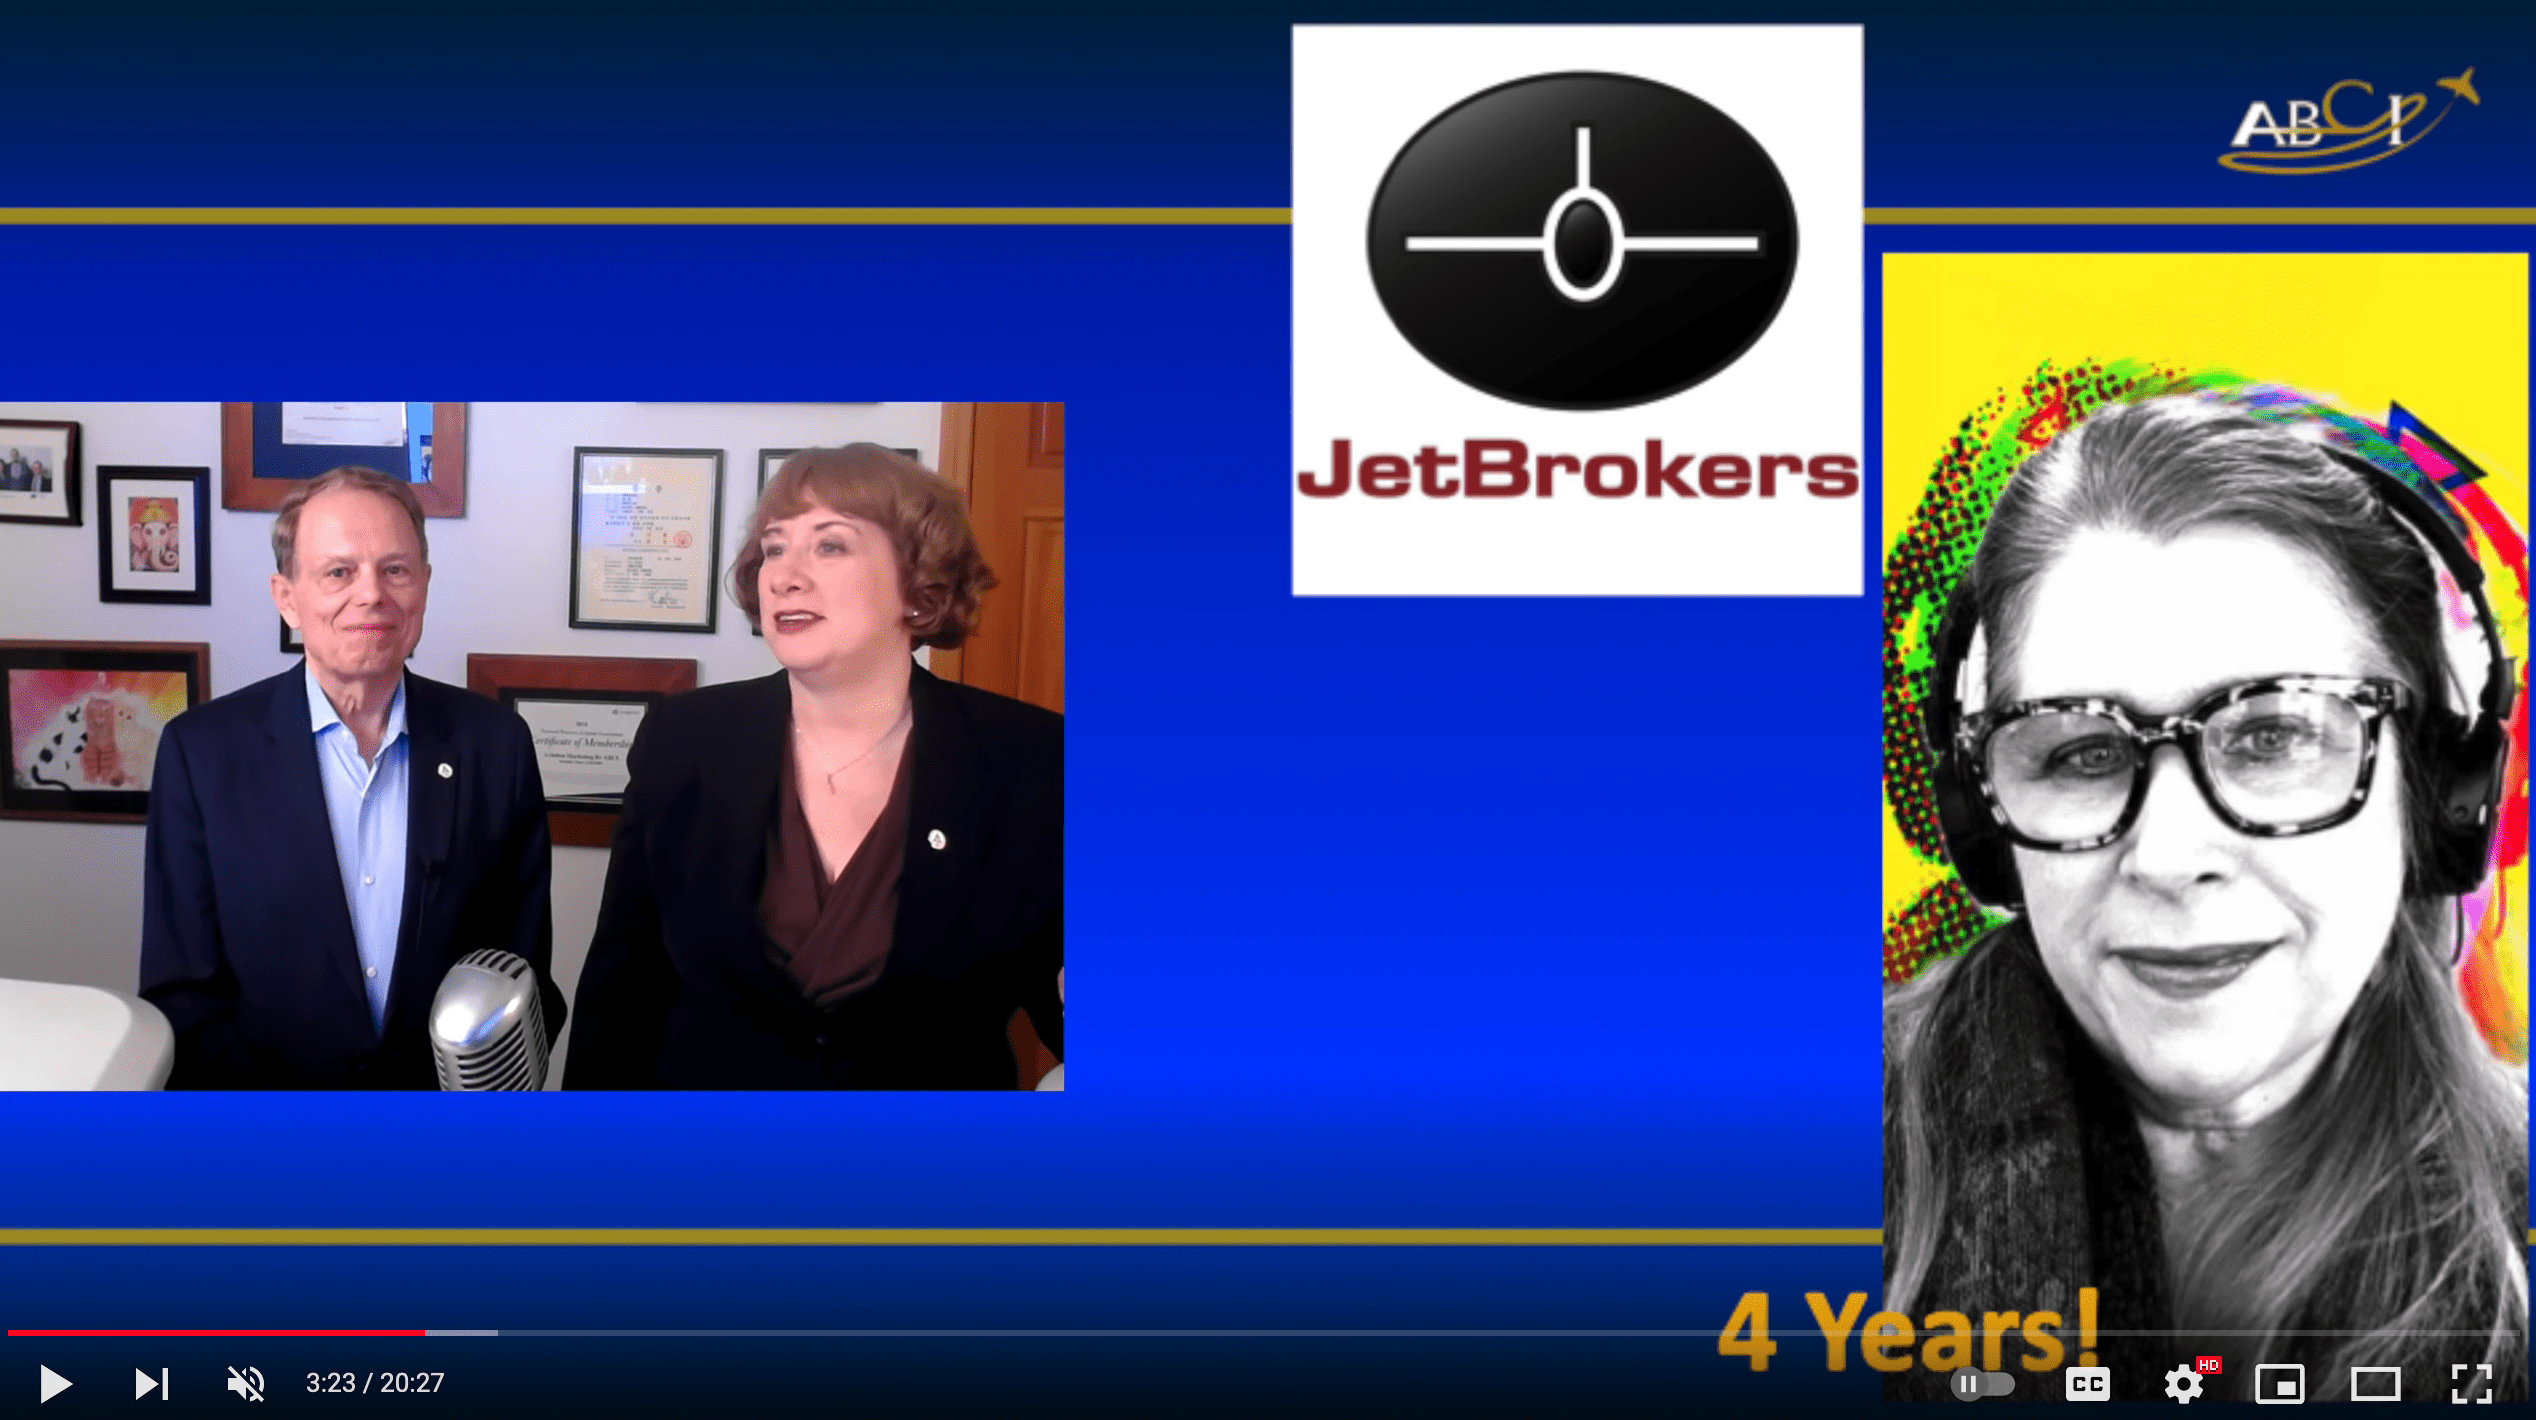 Debbie Murphy of JetBrokers has been a Marketing Lab Member for 4 years!